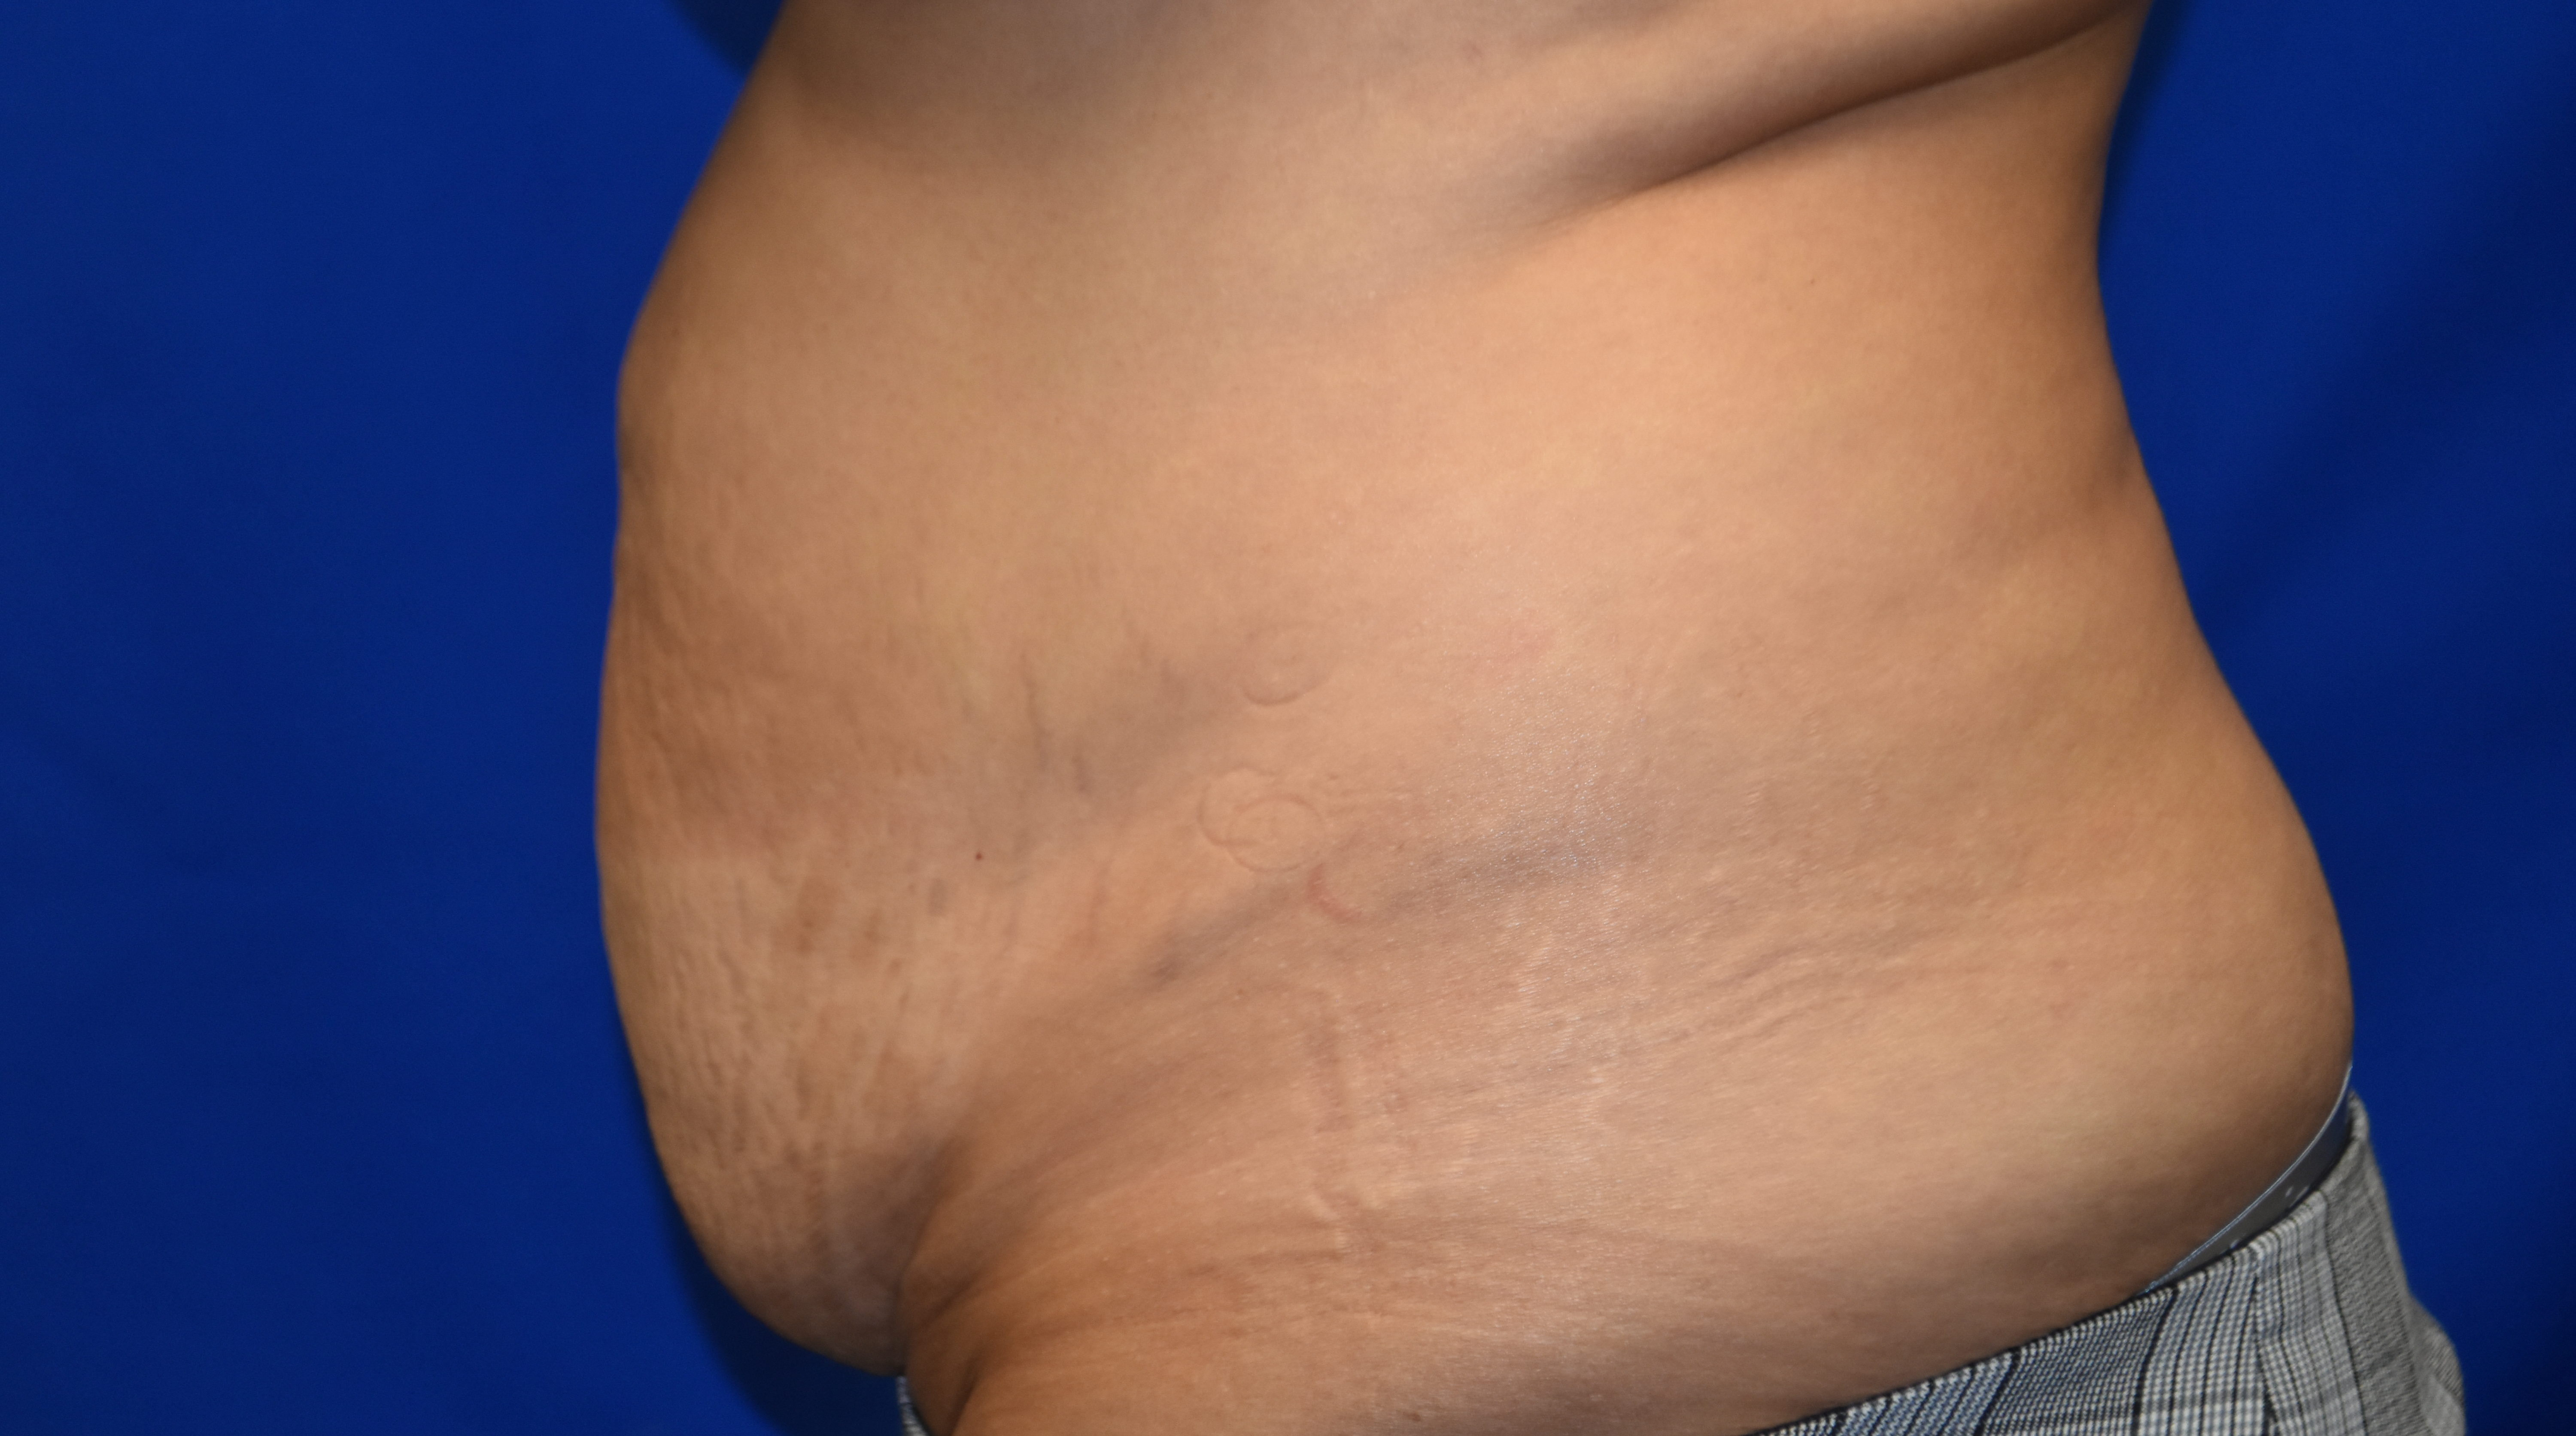 Before-abdominoplasty side